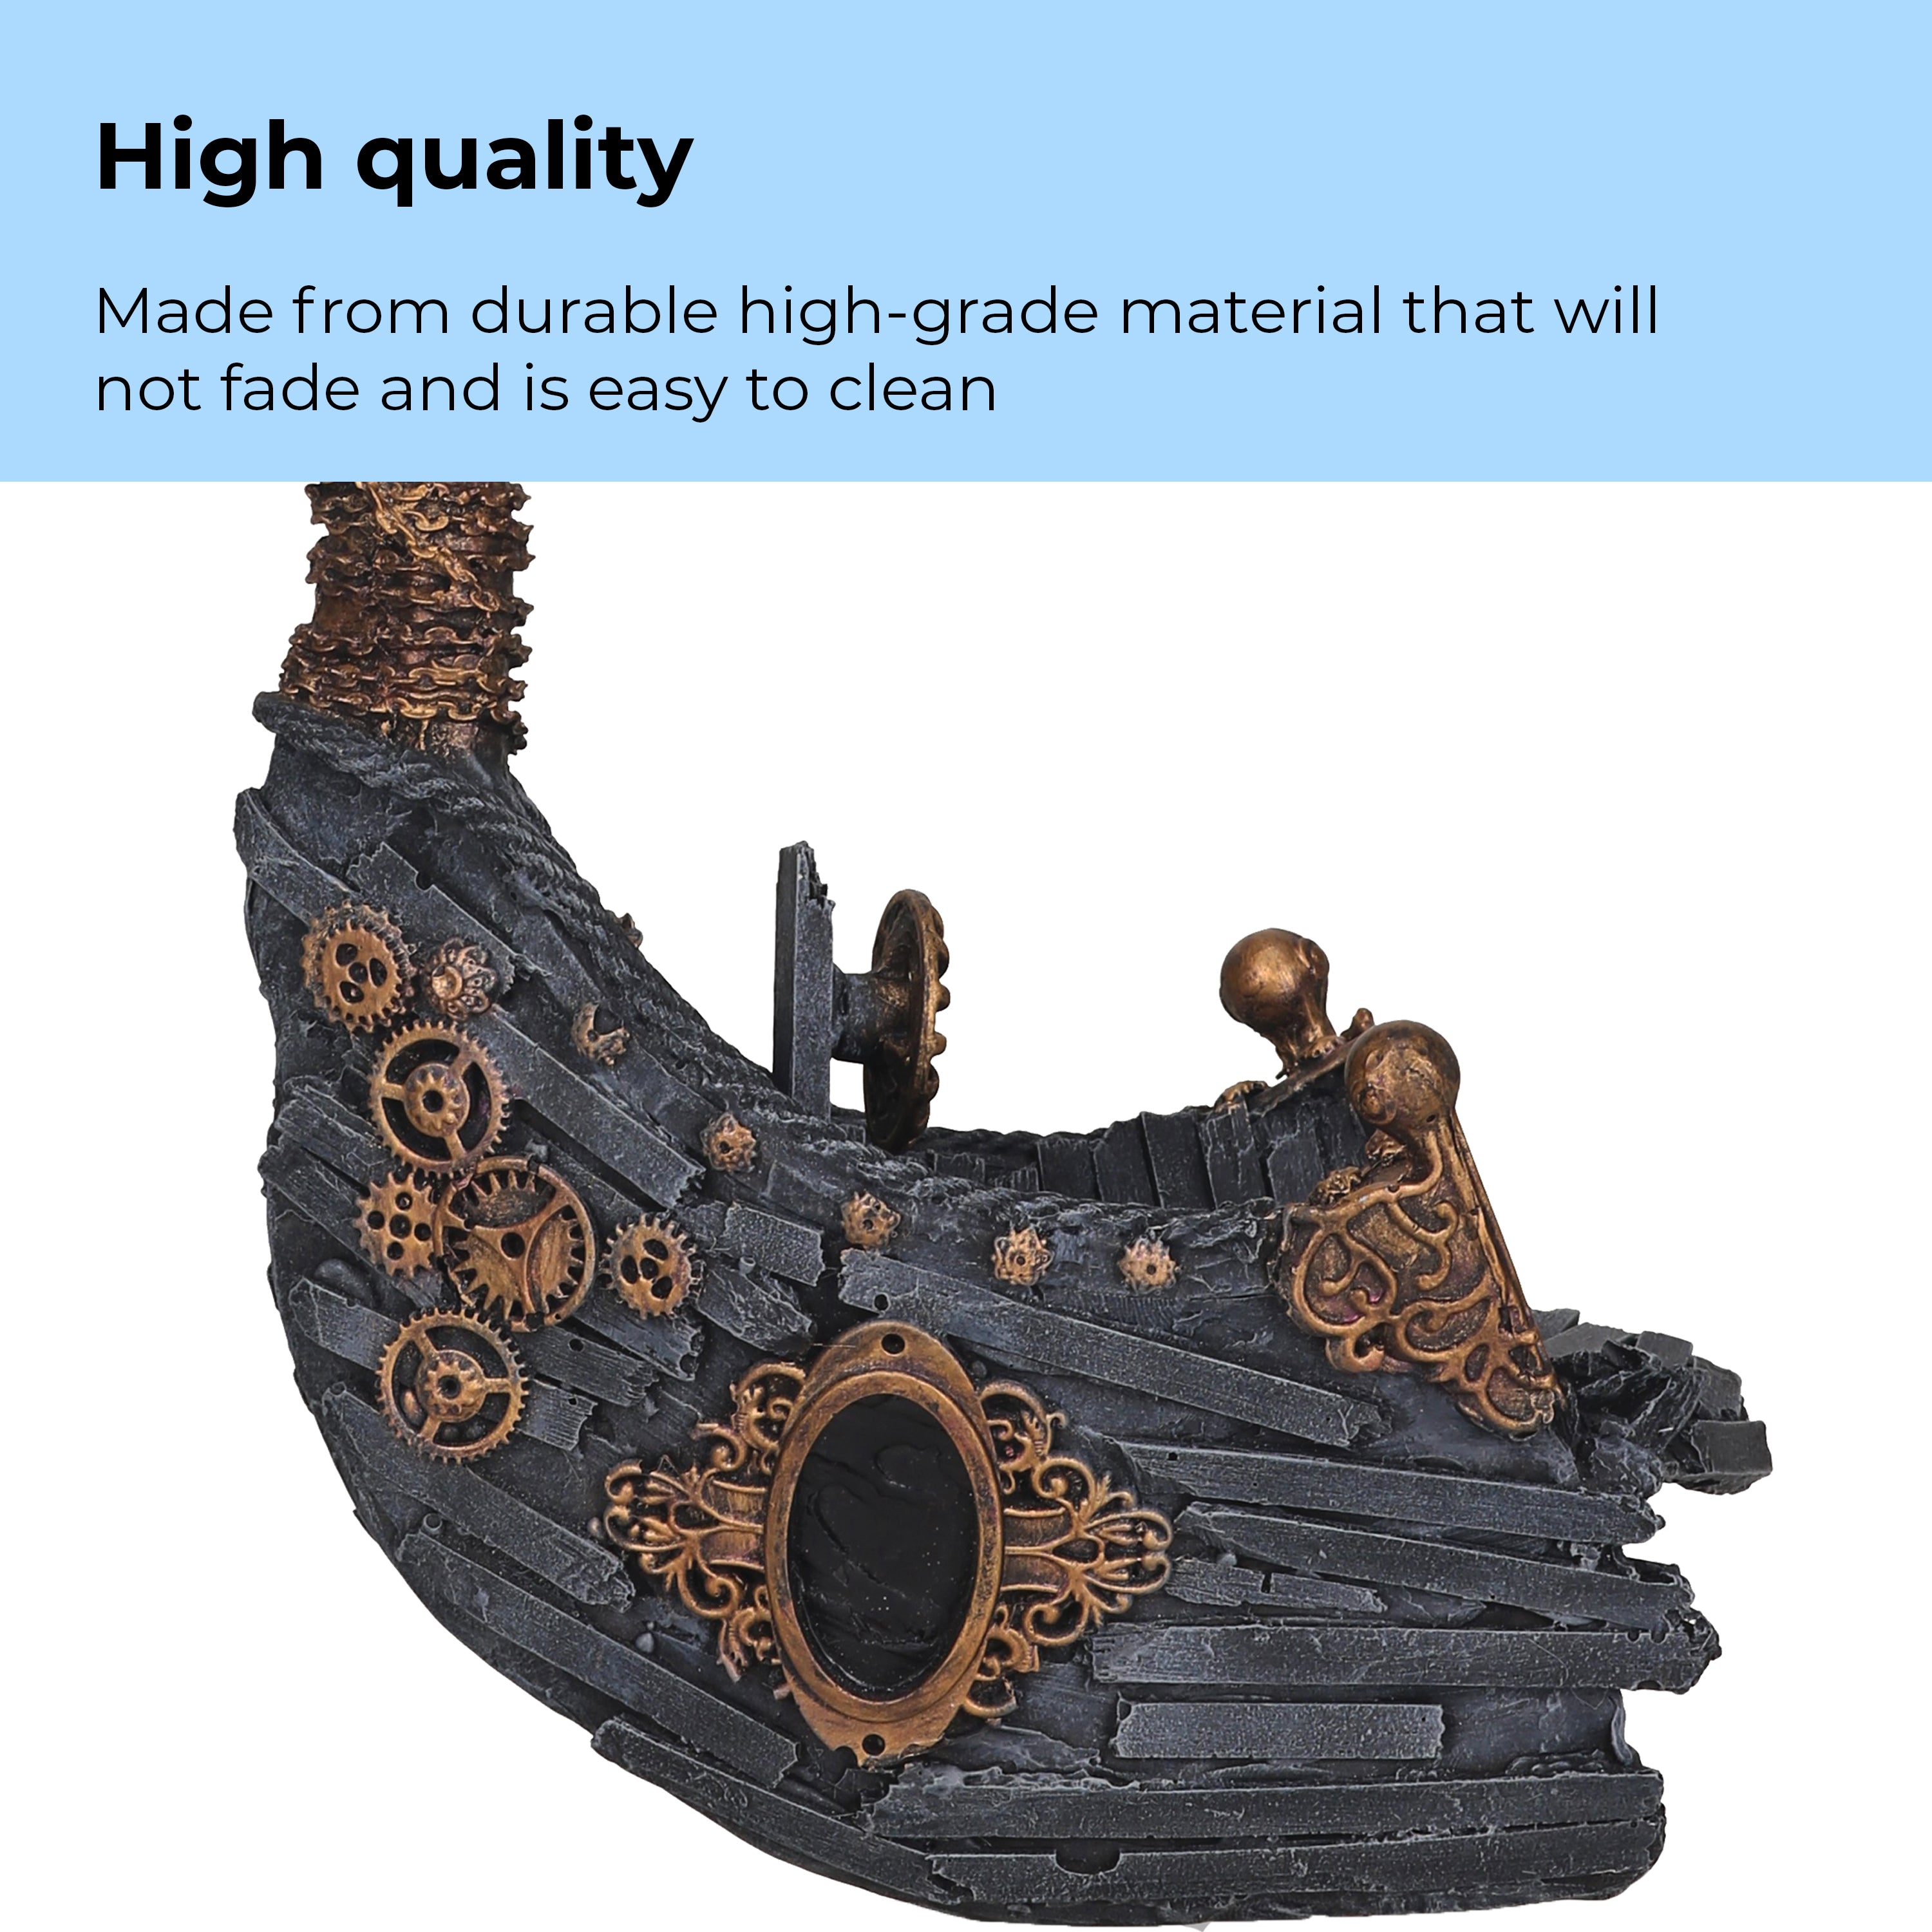 Shipwreck Sculpture - High quality